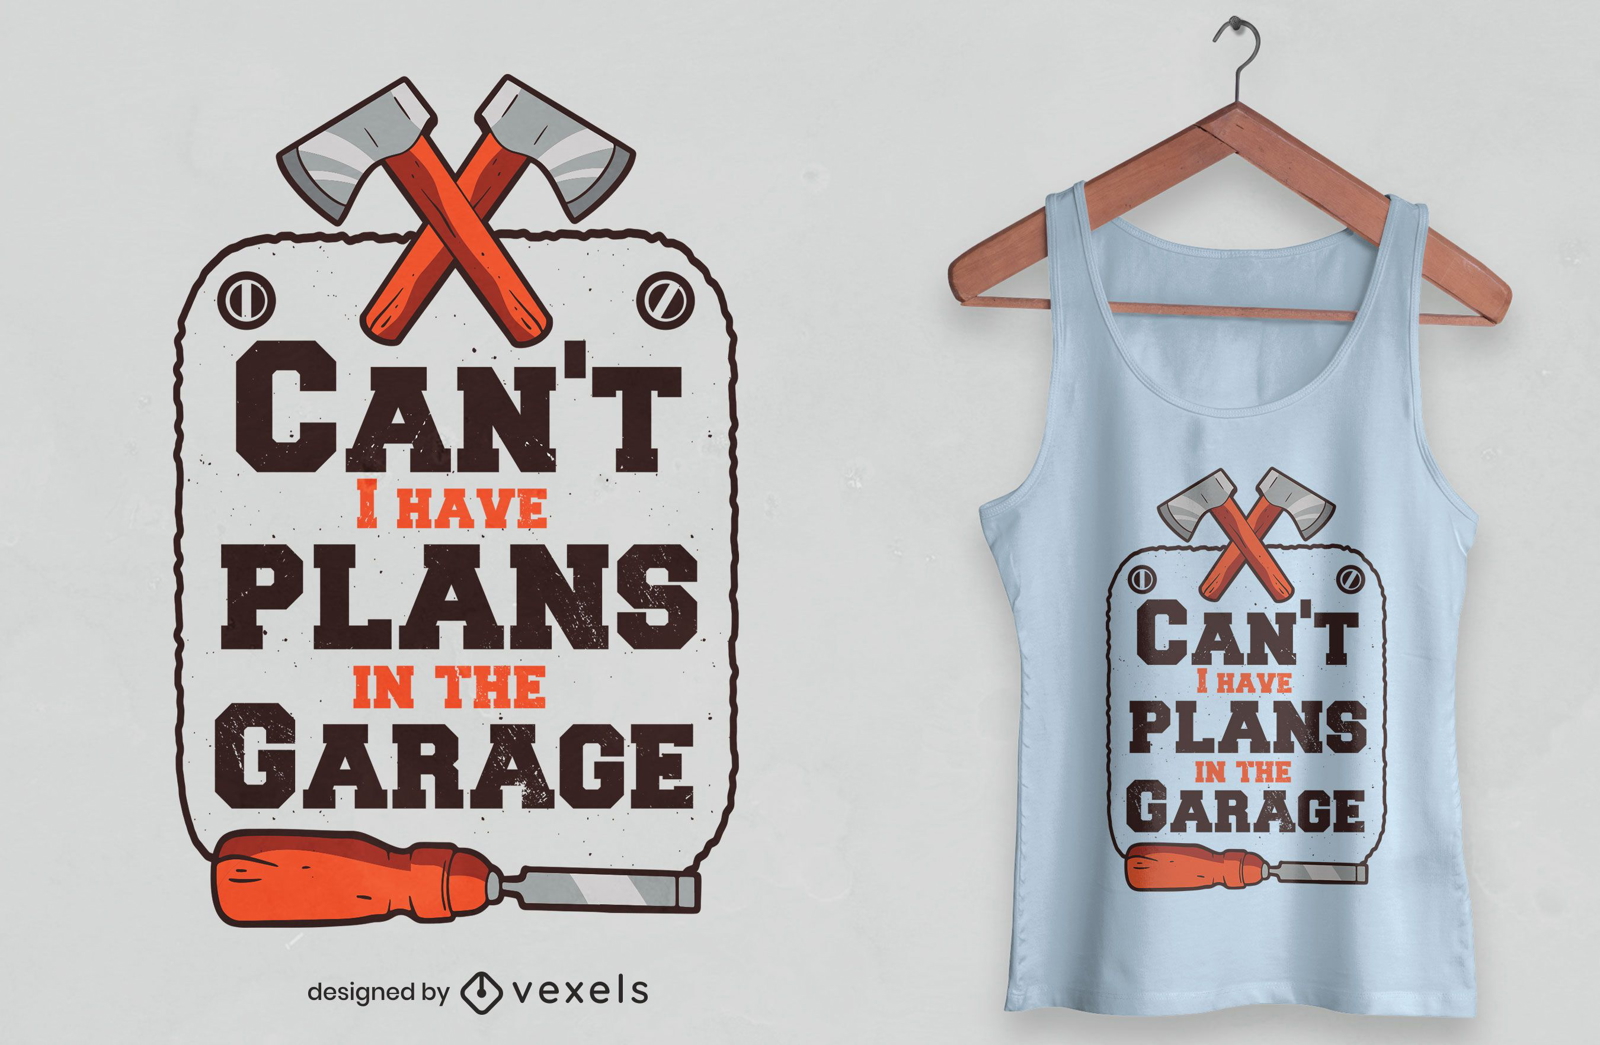 Garage plans quote t-shirt design